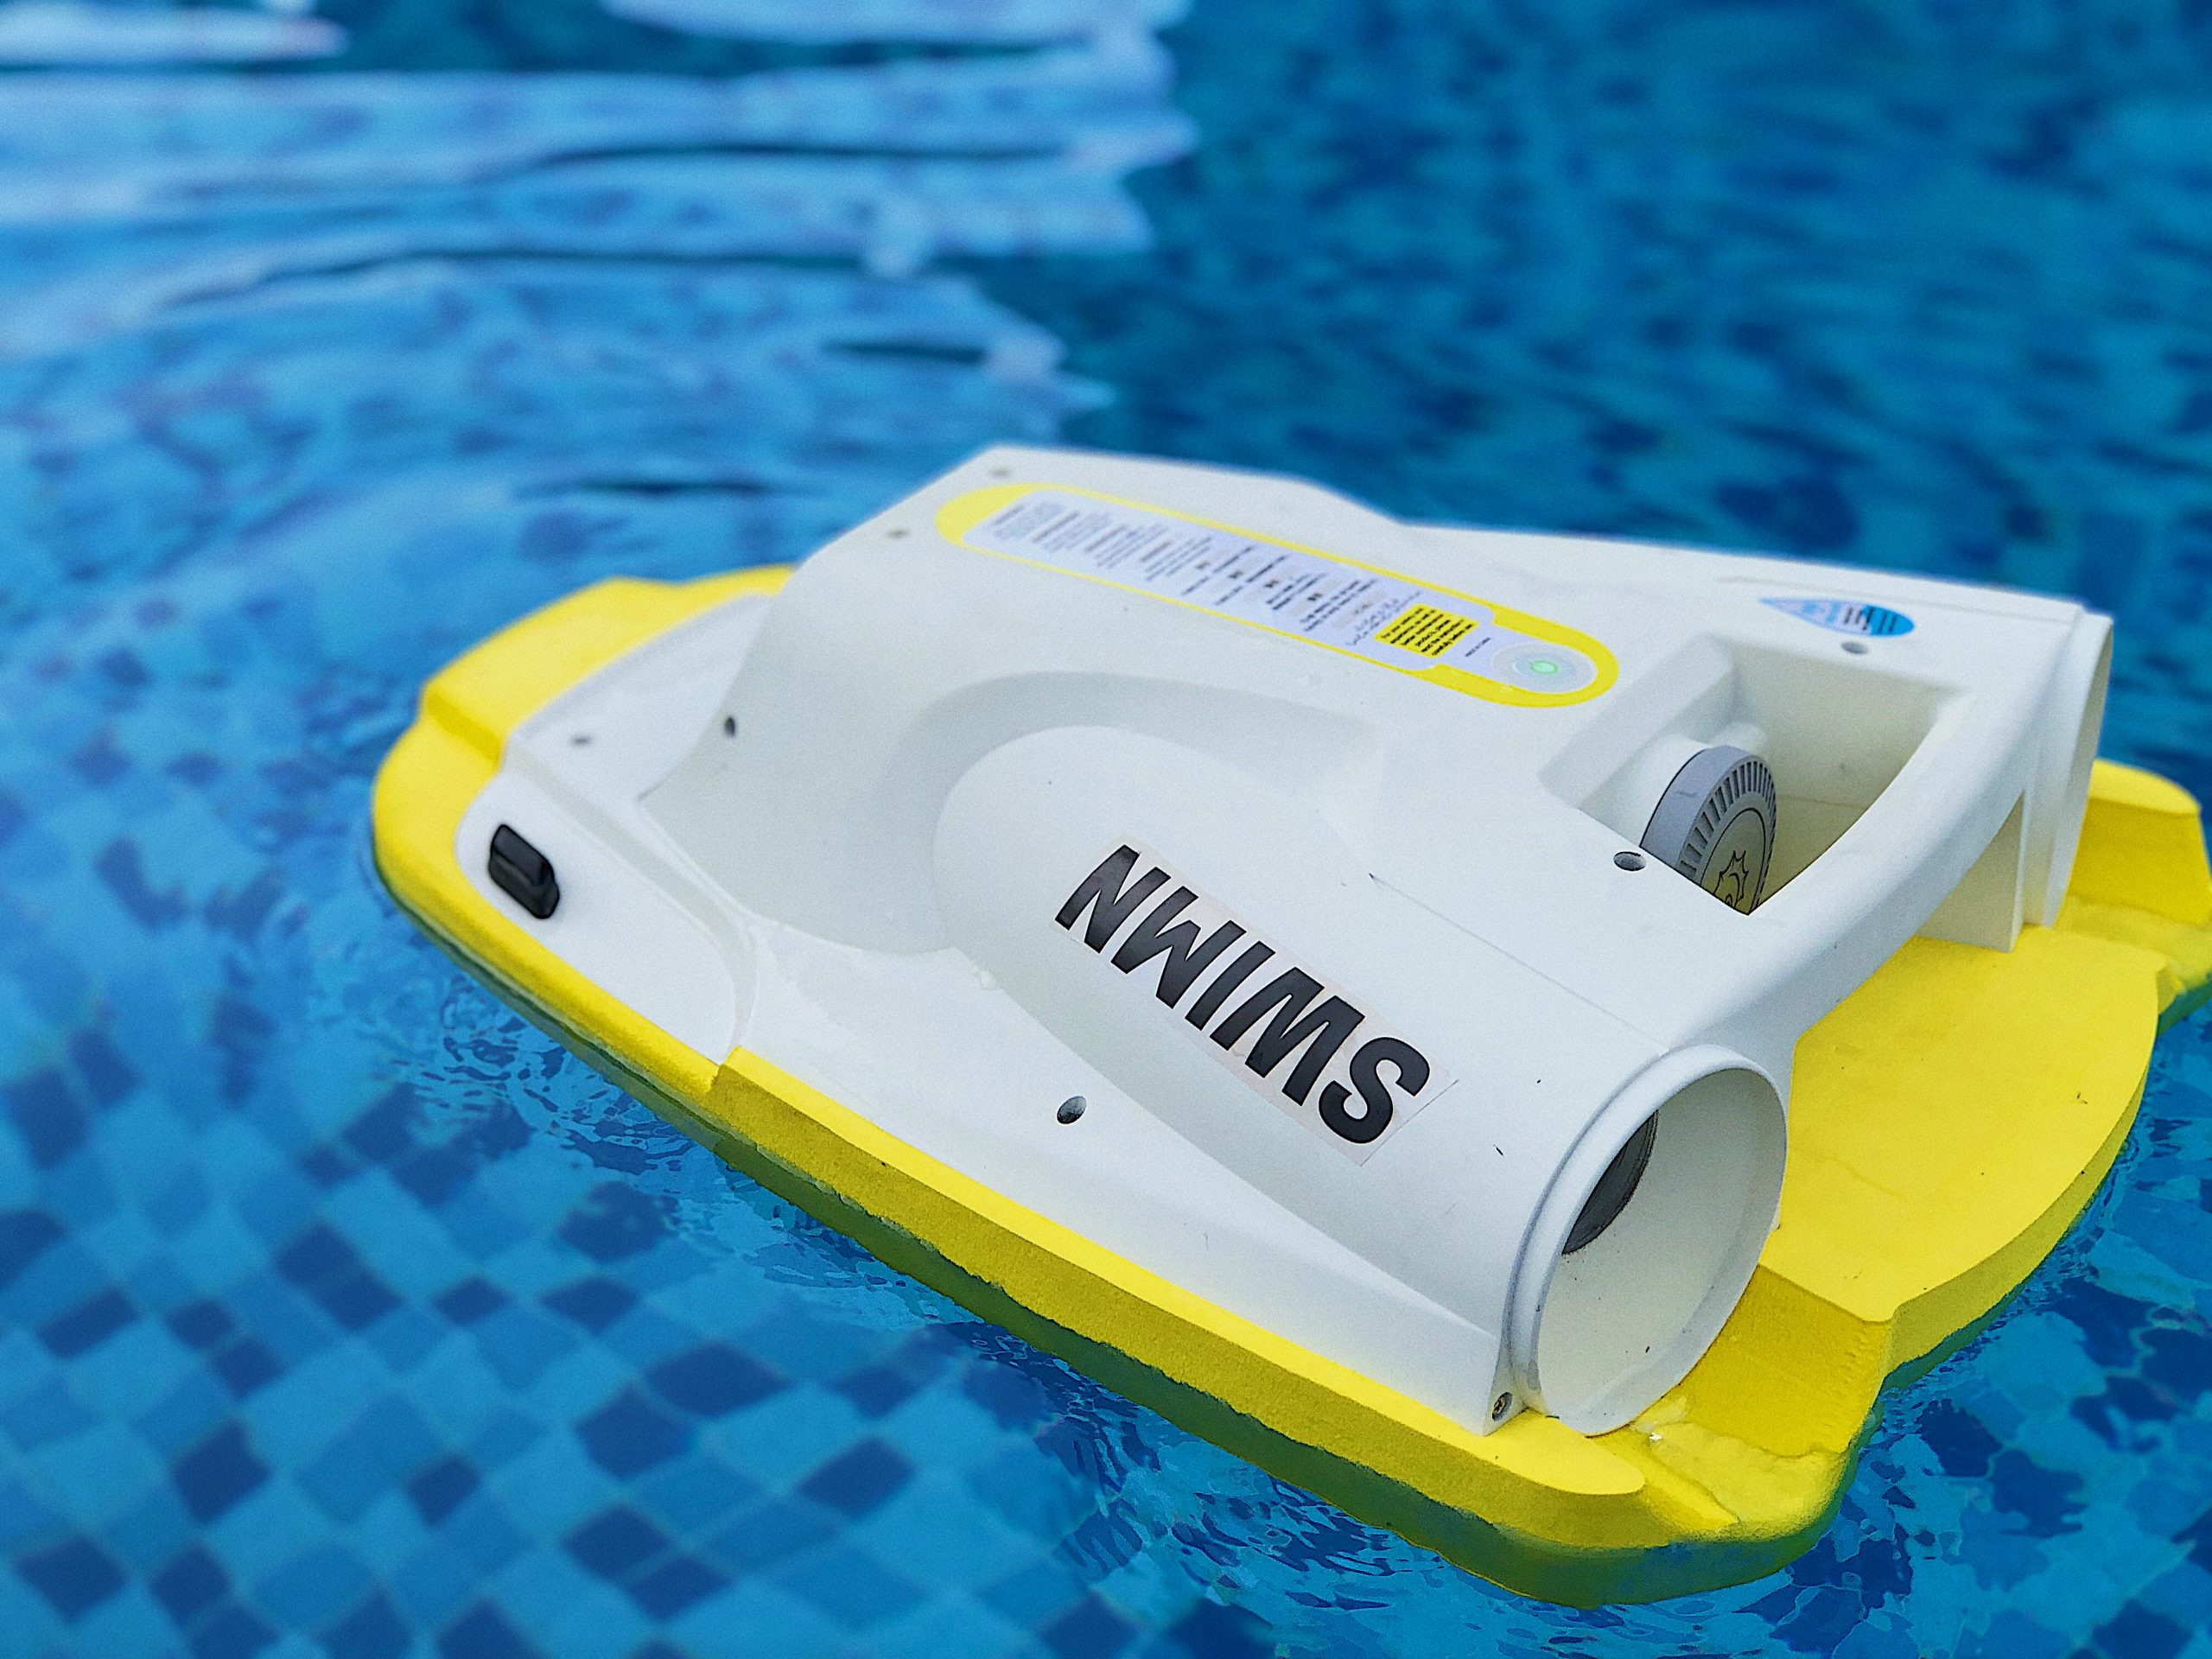 Водный скутер Swimn s1 Yellow (Swimn-s1). Доска для плавания с мотором. Штука для плавания с мотором. Доска для плавания с моторчиком. Доска для водного маркера